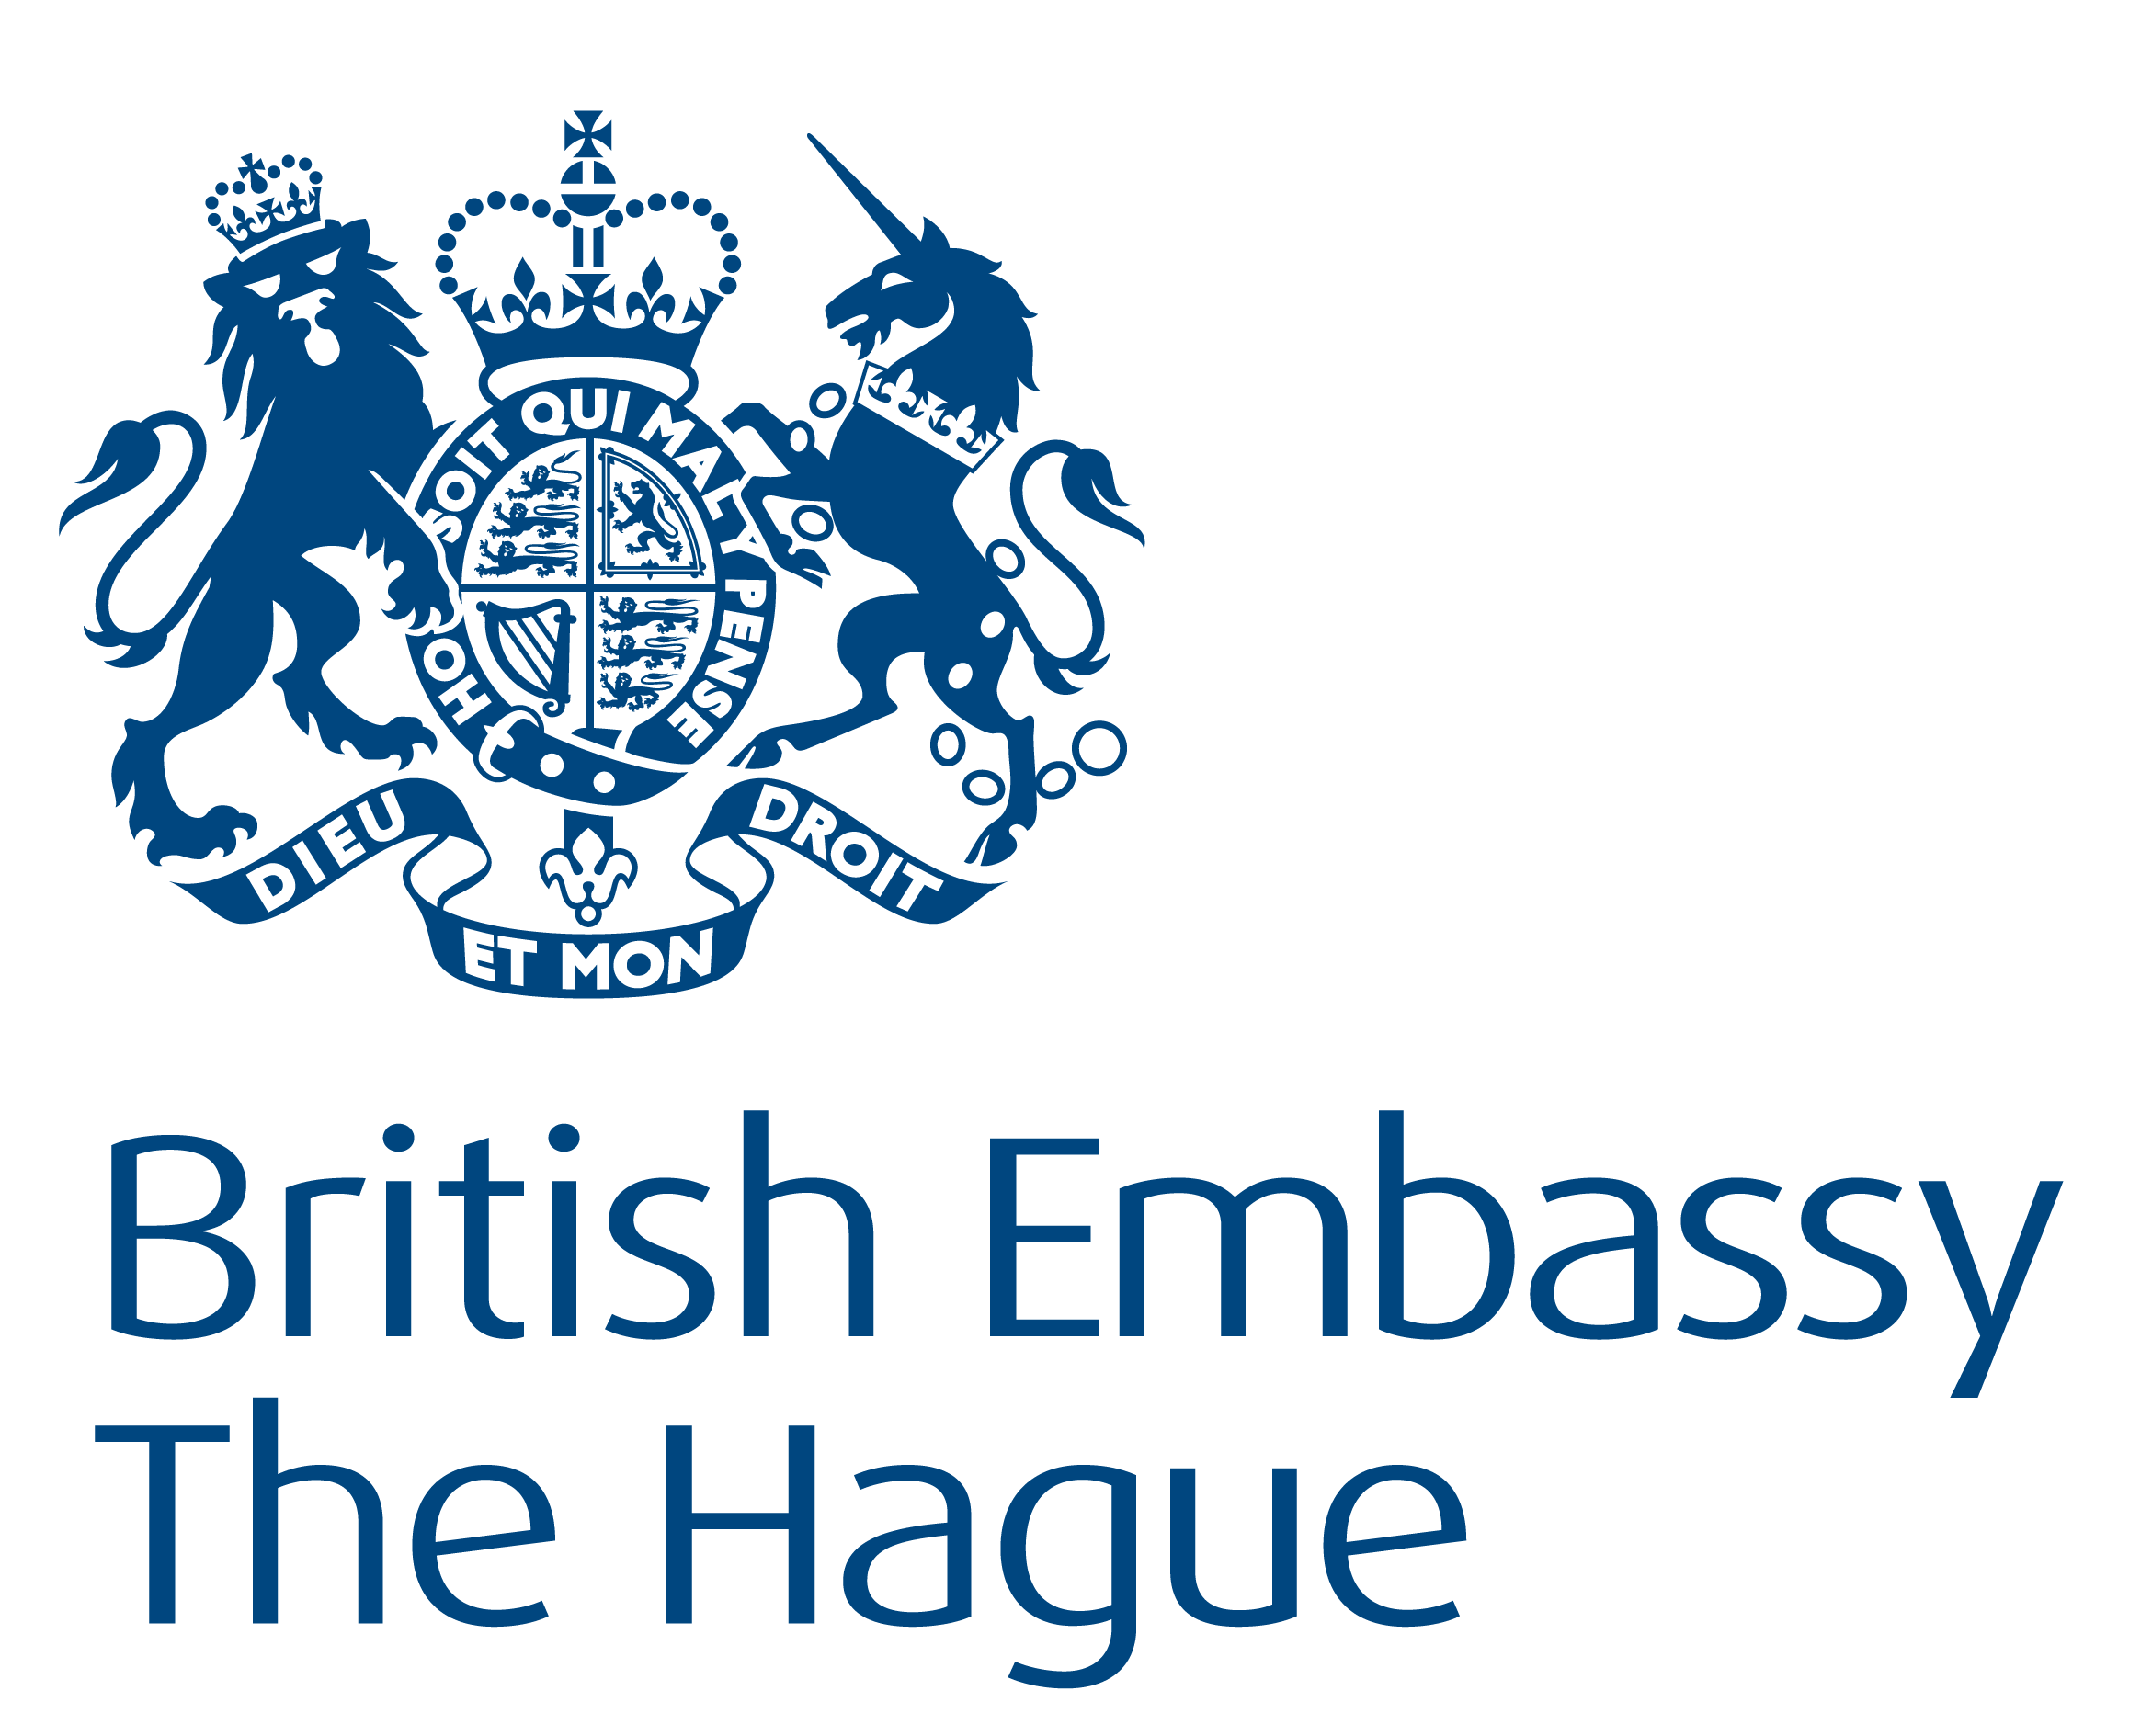 British Embassy The Hague